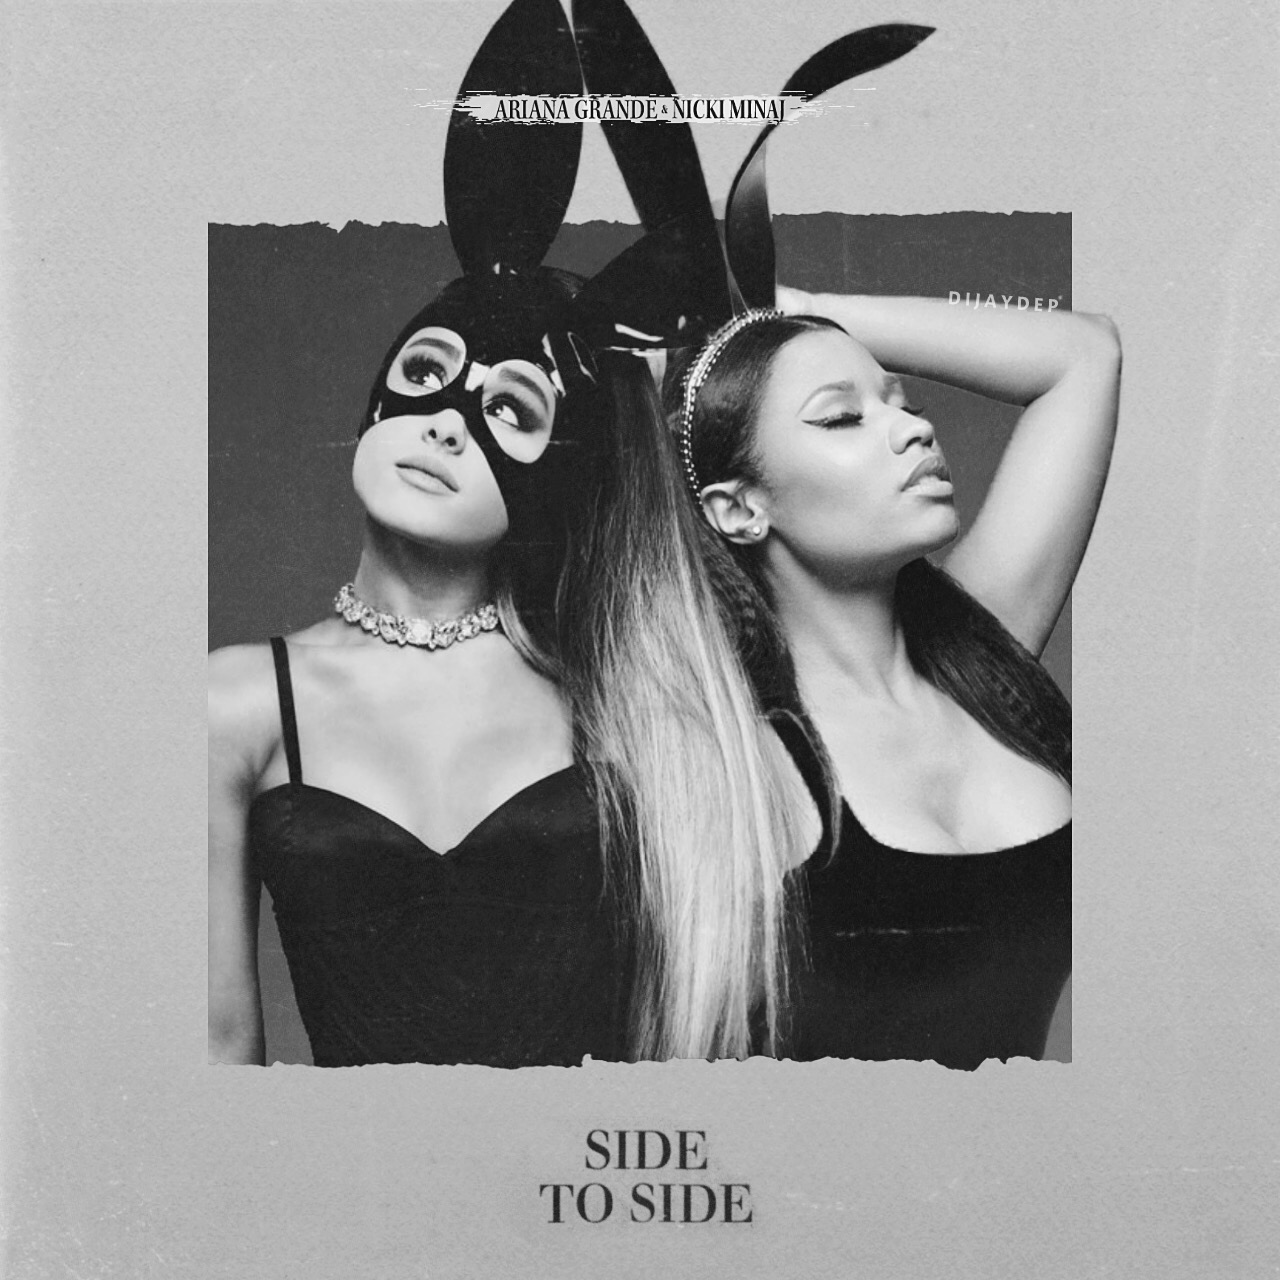 Ariana Grande Nicki Minaj Side to Side Album Cover for Wallpaper [lyrics] Wallpaper. Wallpaper Download. High Resolution Wallpaper